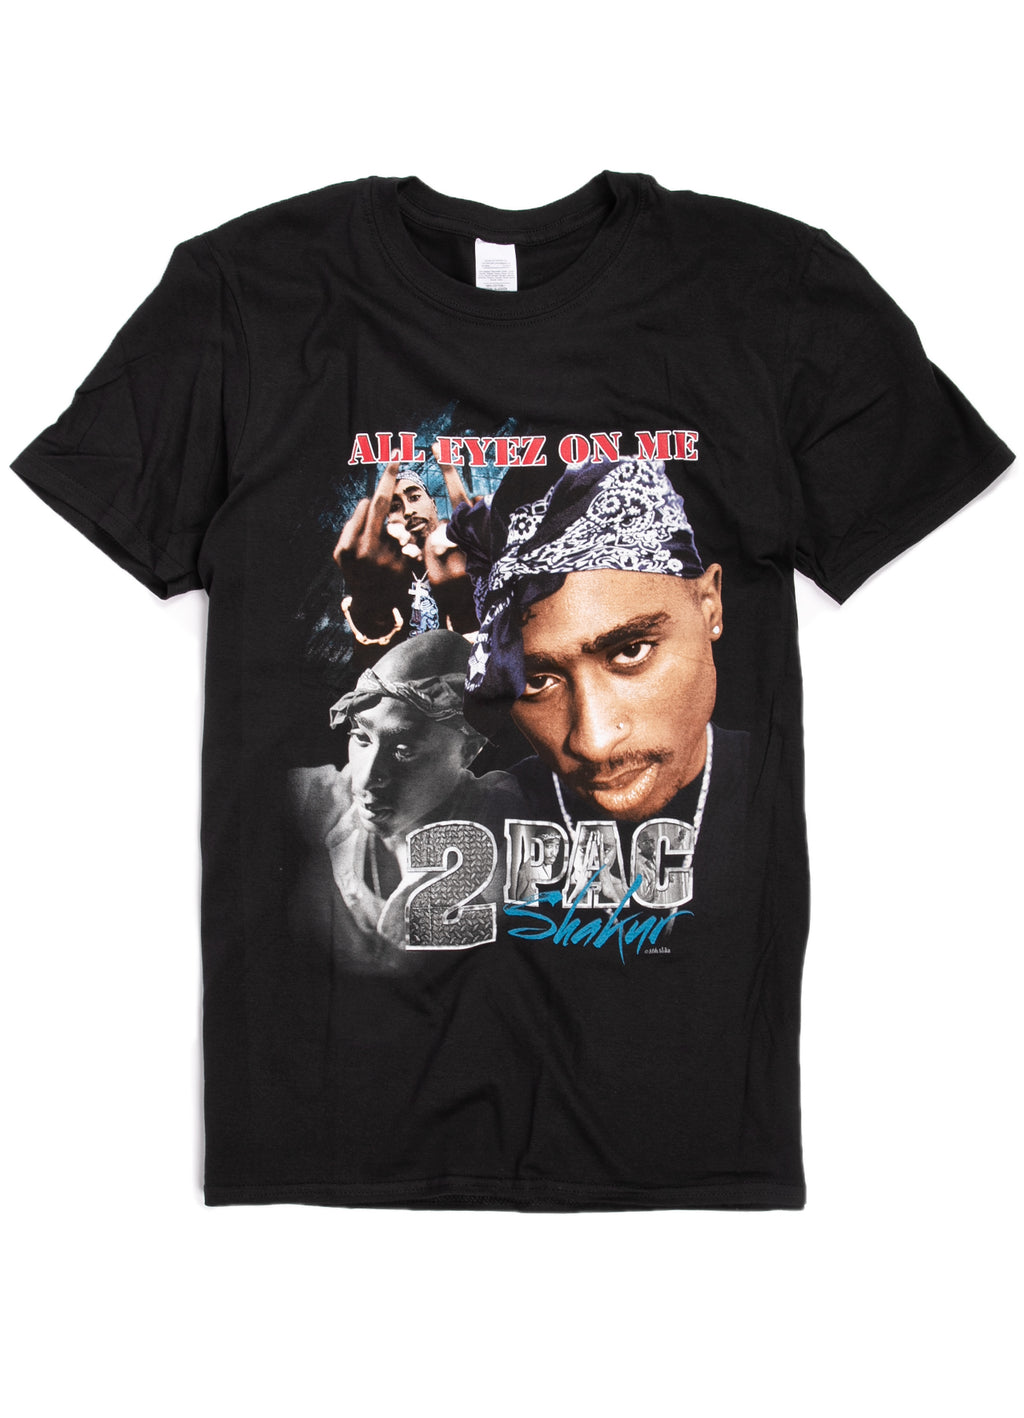 Tupac "All Eyez On Me" t-shirt.